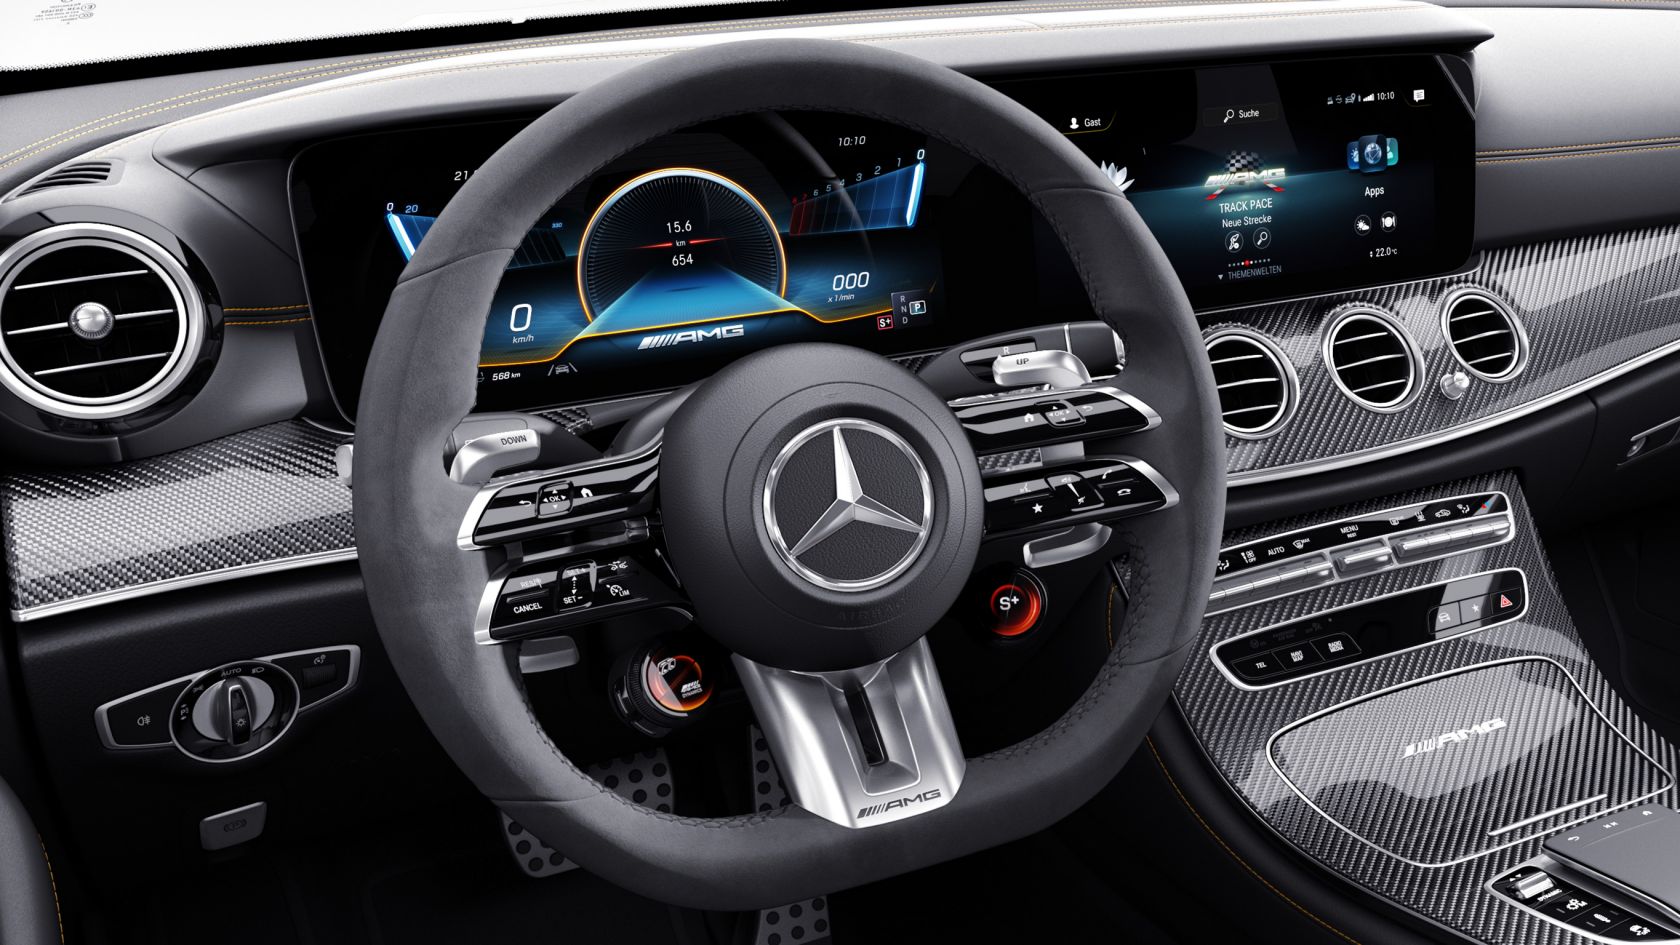 Mercedes-AMG E-Class Універсал Дизайн інтер’єру - Mercedes-AMG E 63 4MATIC+ та Mercedes-AMG E 63 S 4MATIC+ #1